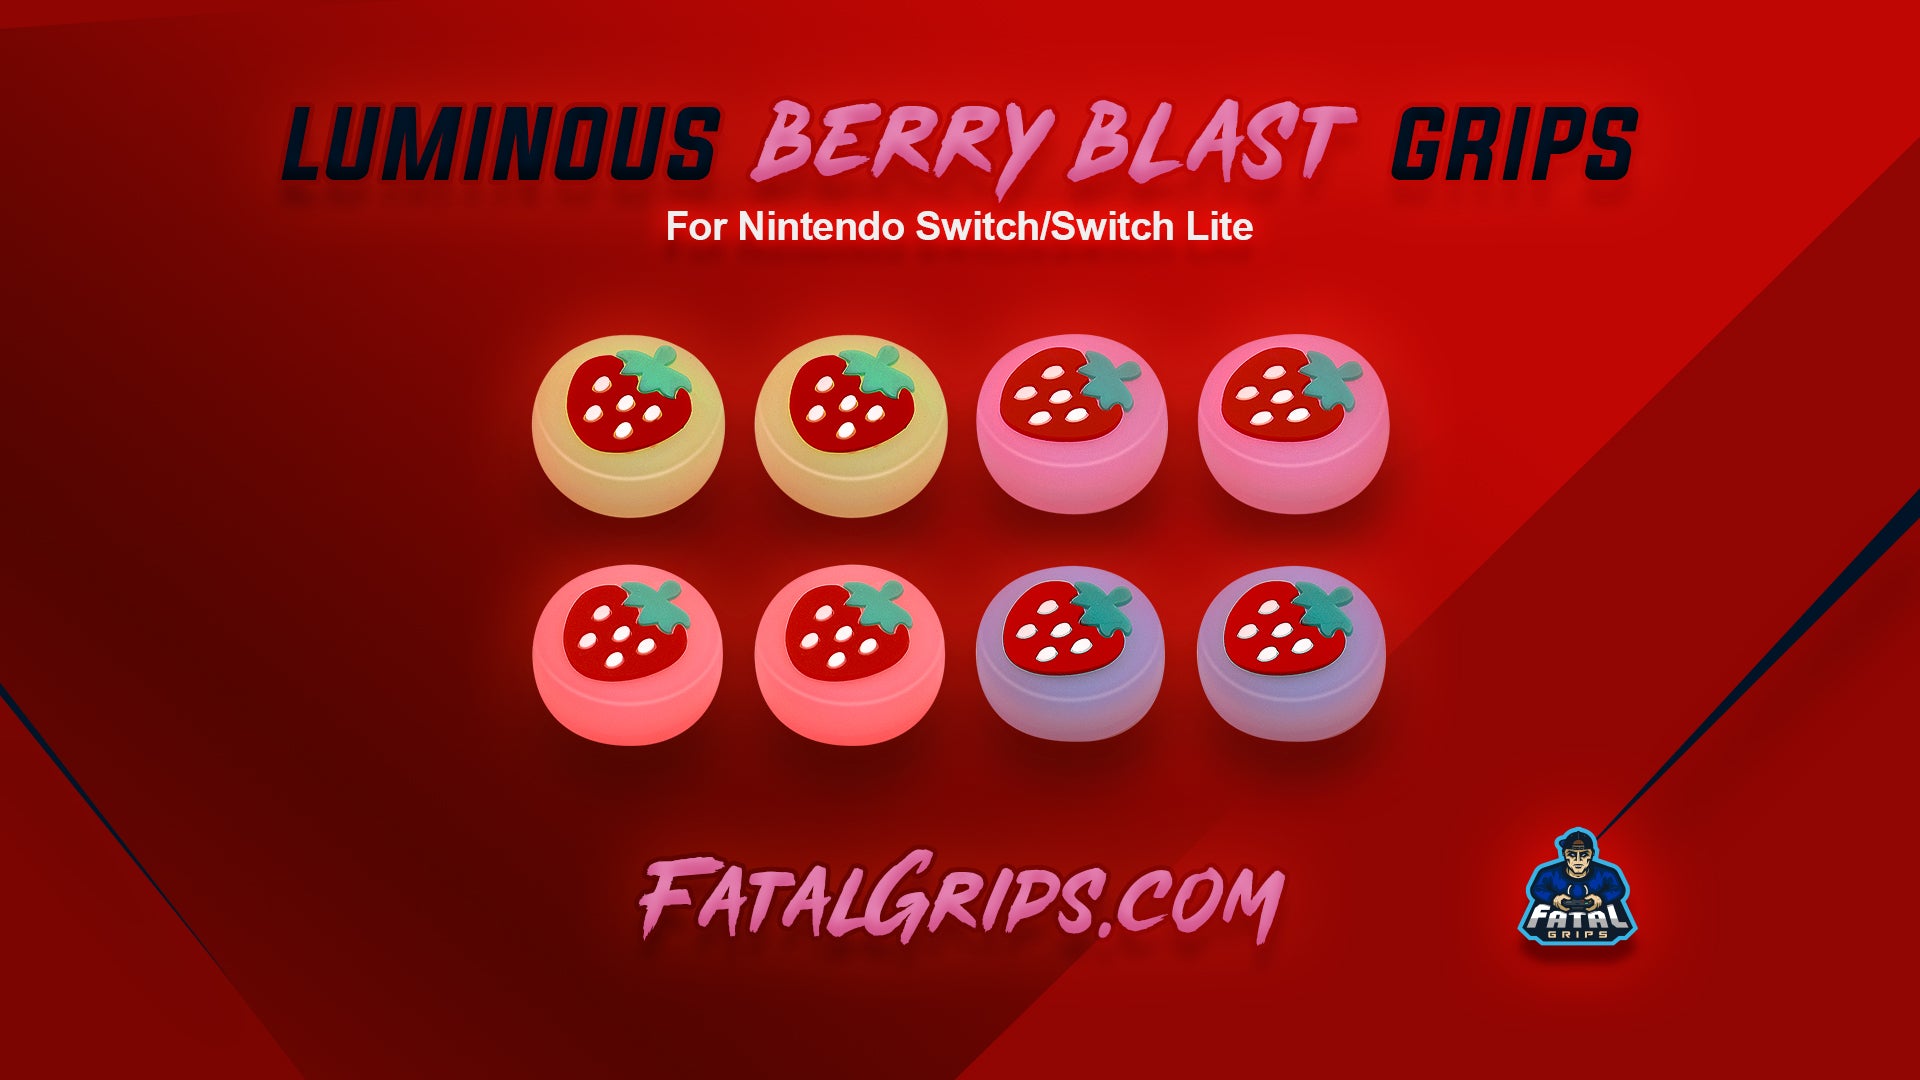 Berry Blast Grips